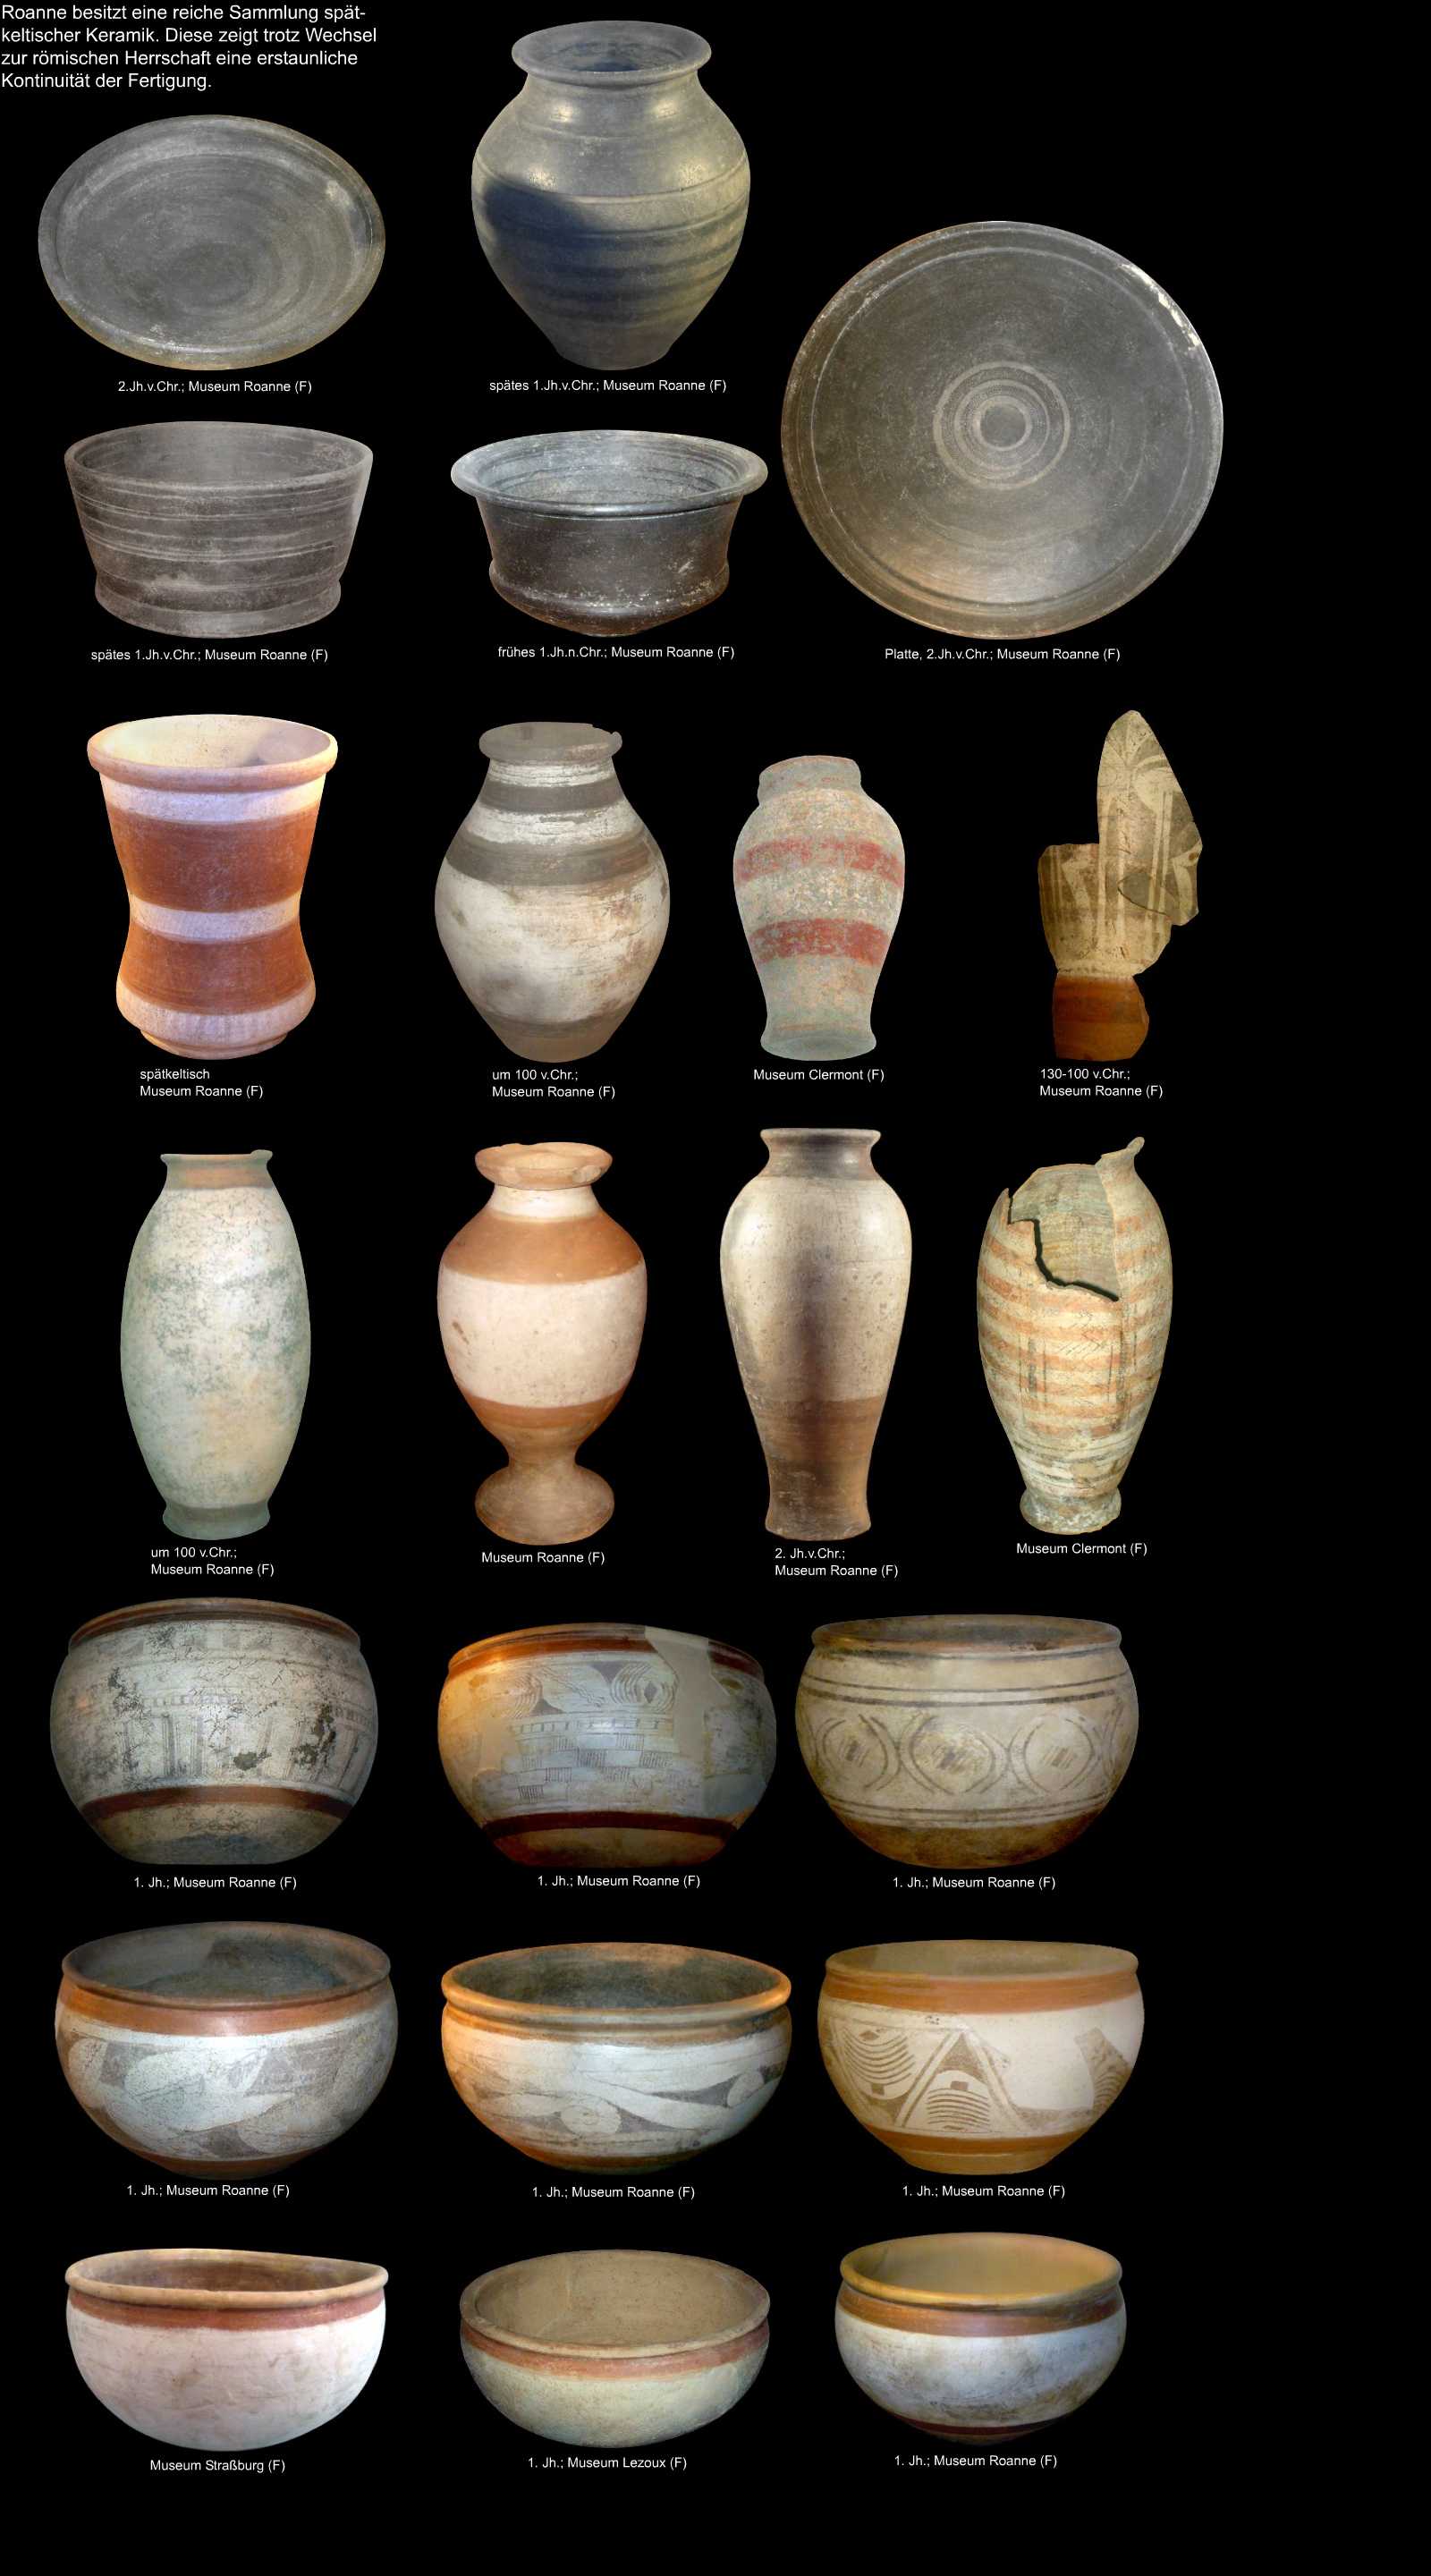 Keramik aus Roanne